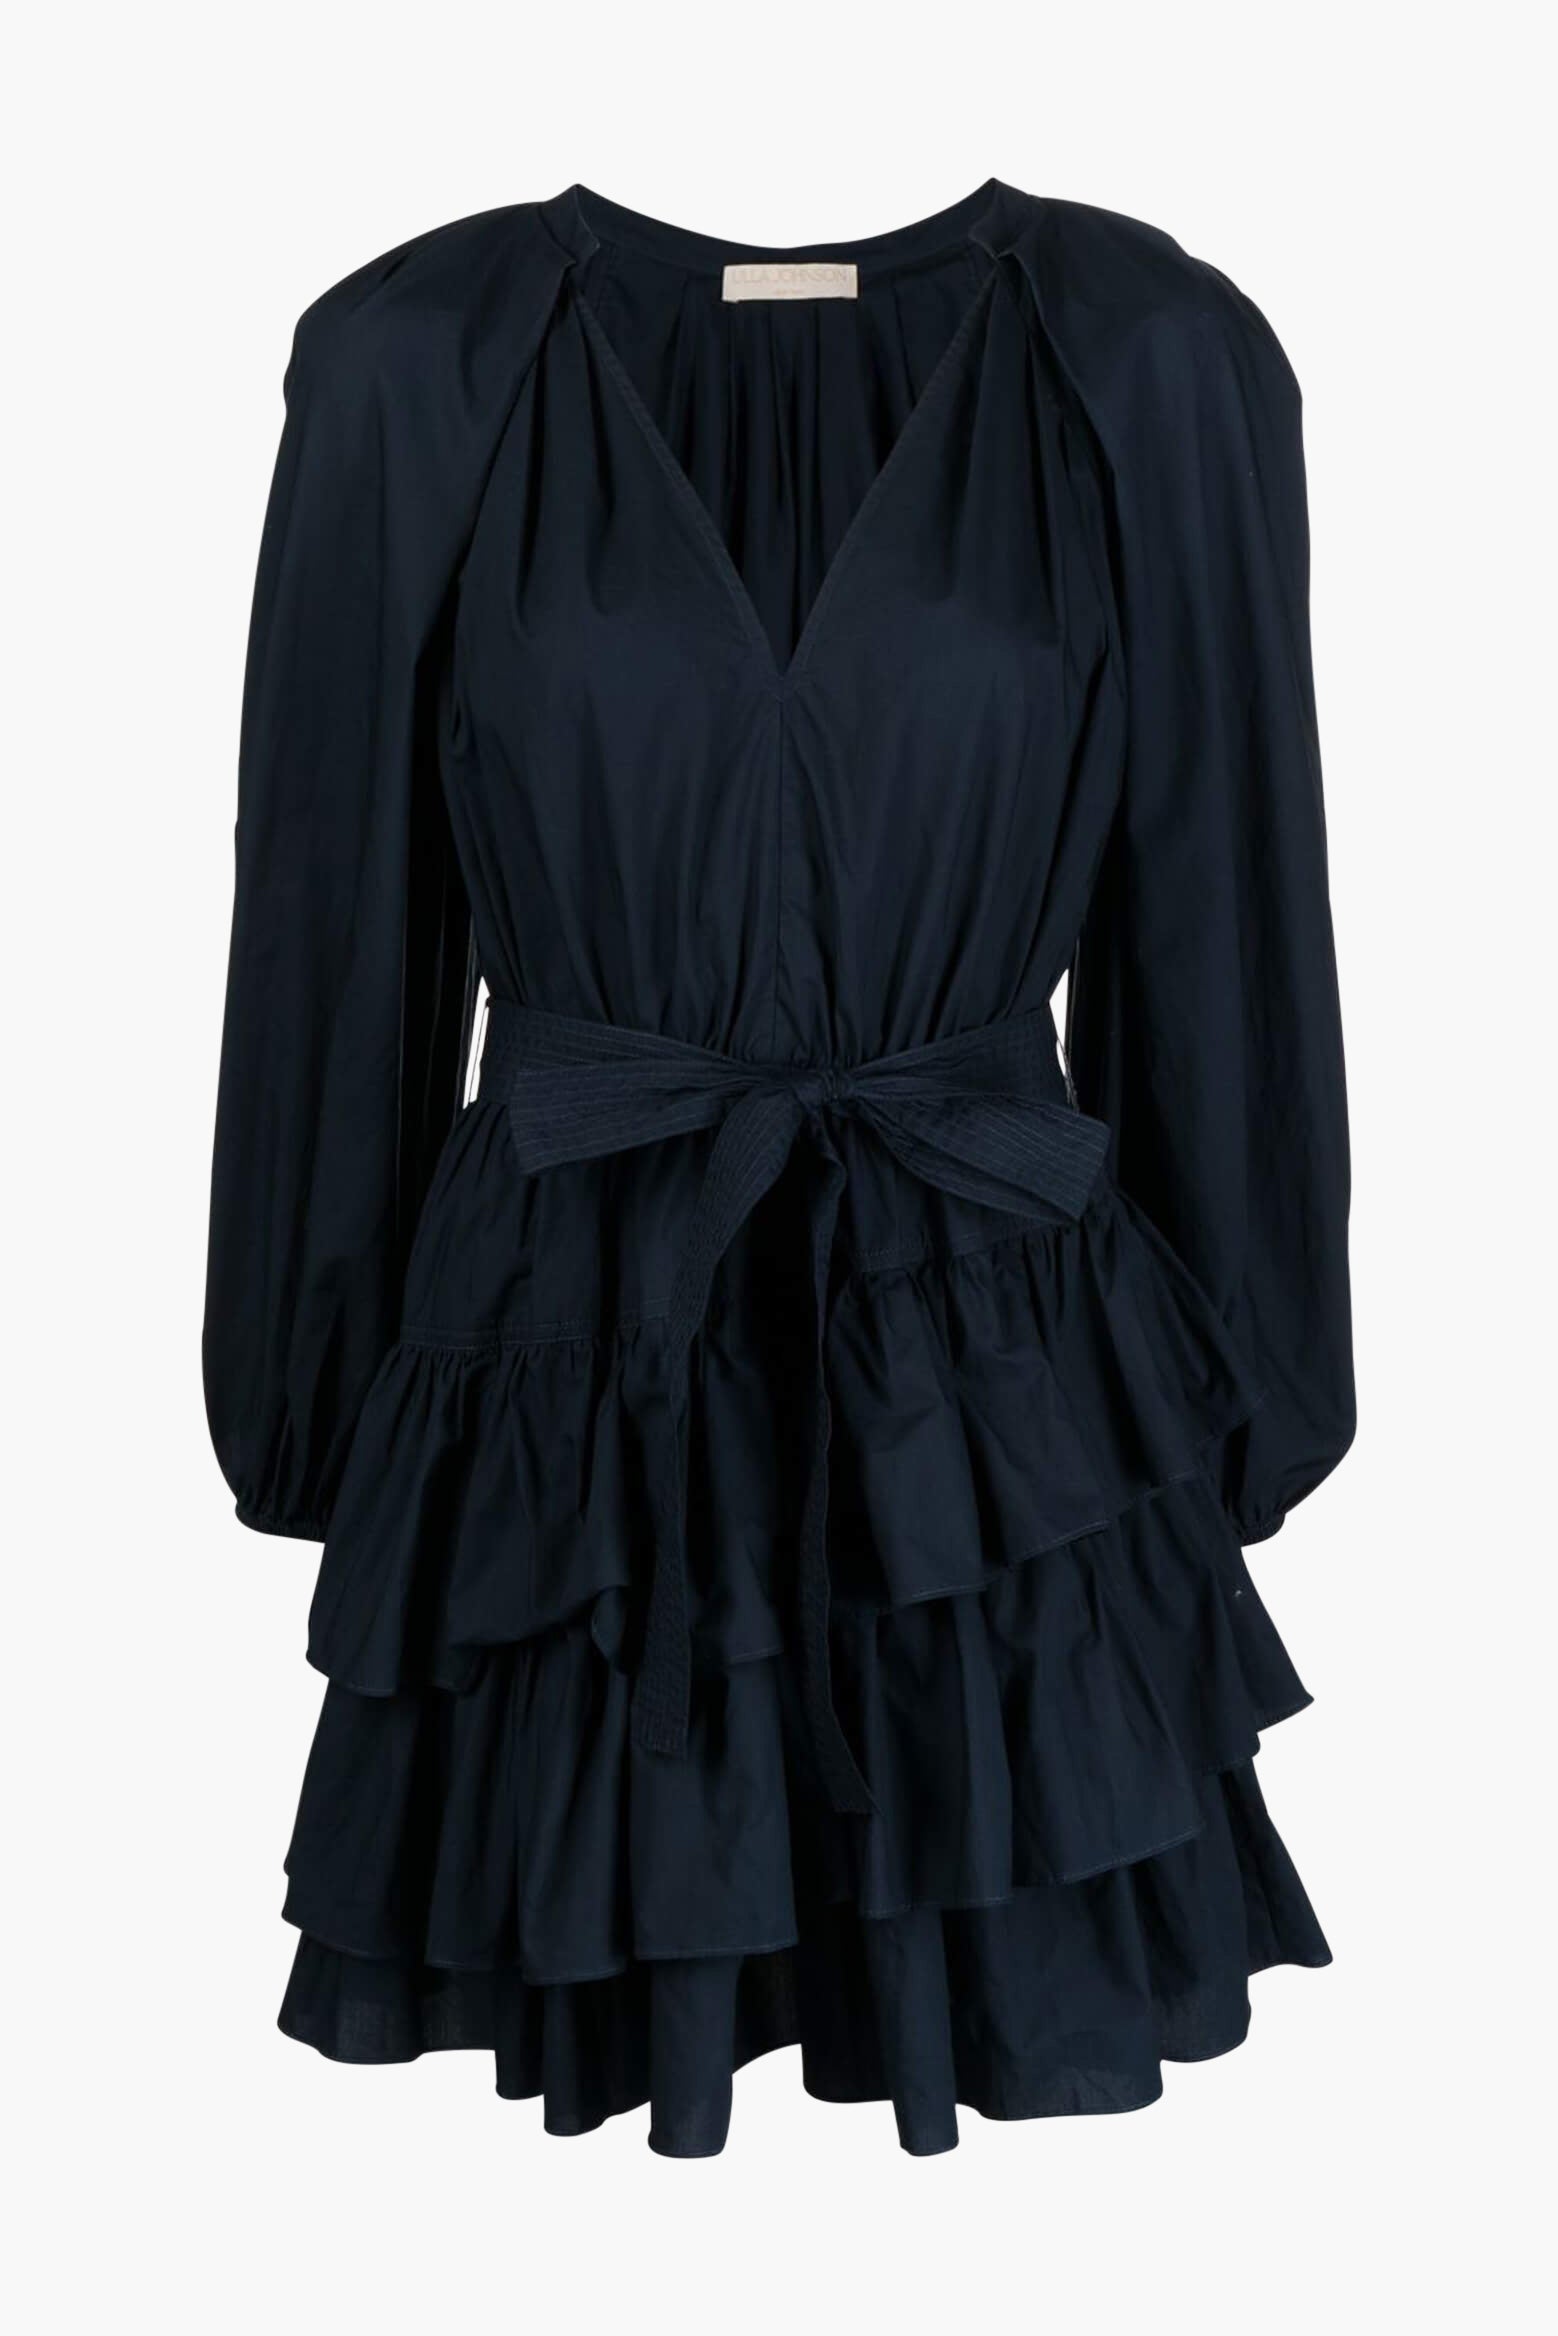 Ulla Johnson Miranda Dress in Midnight available at The New Trend